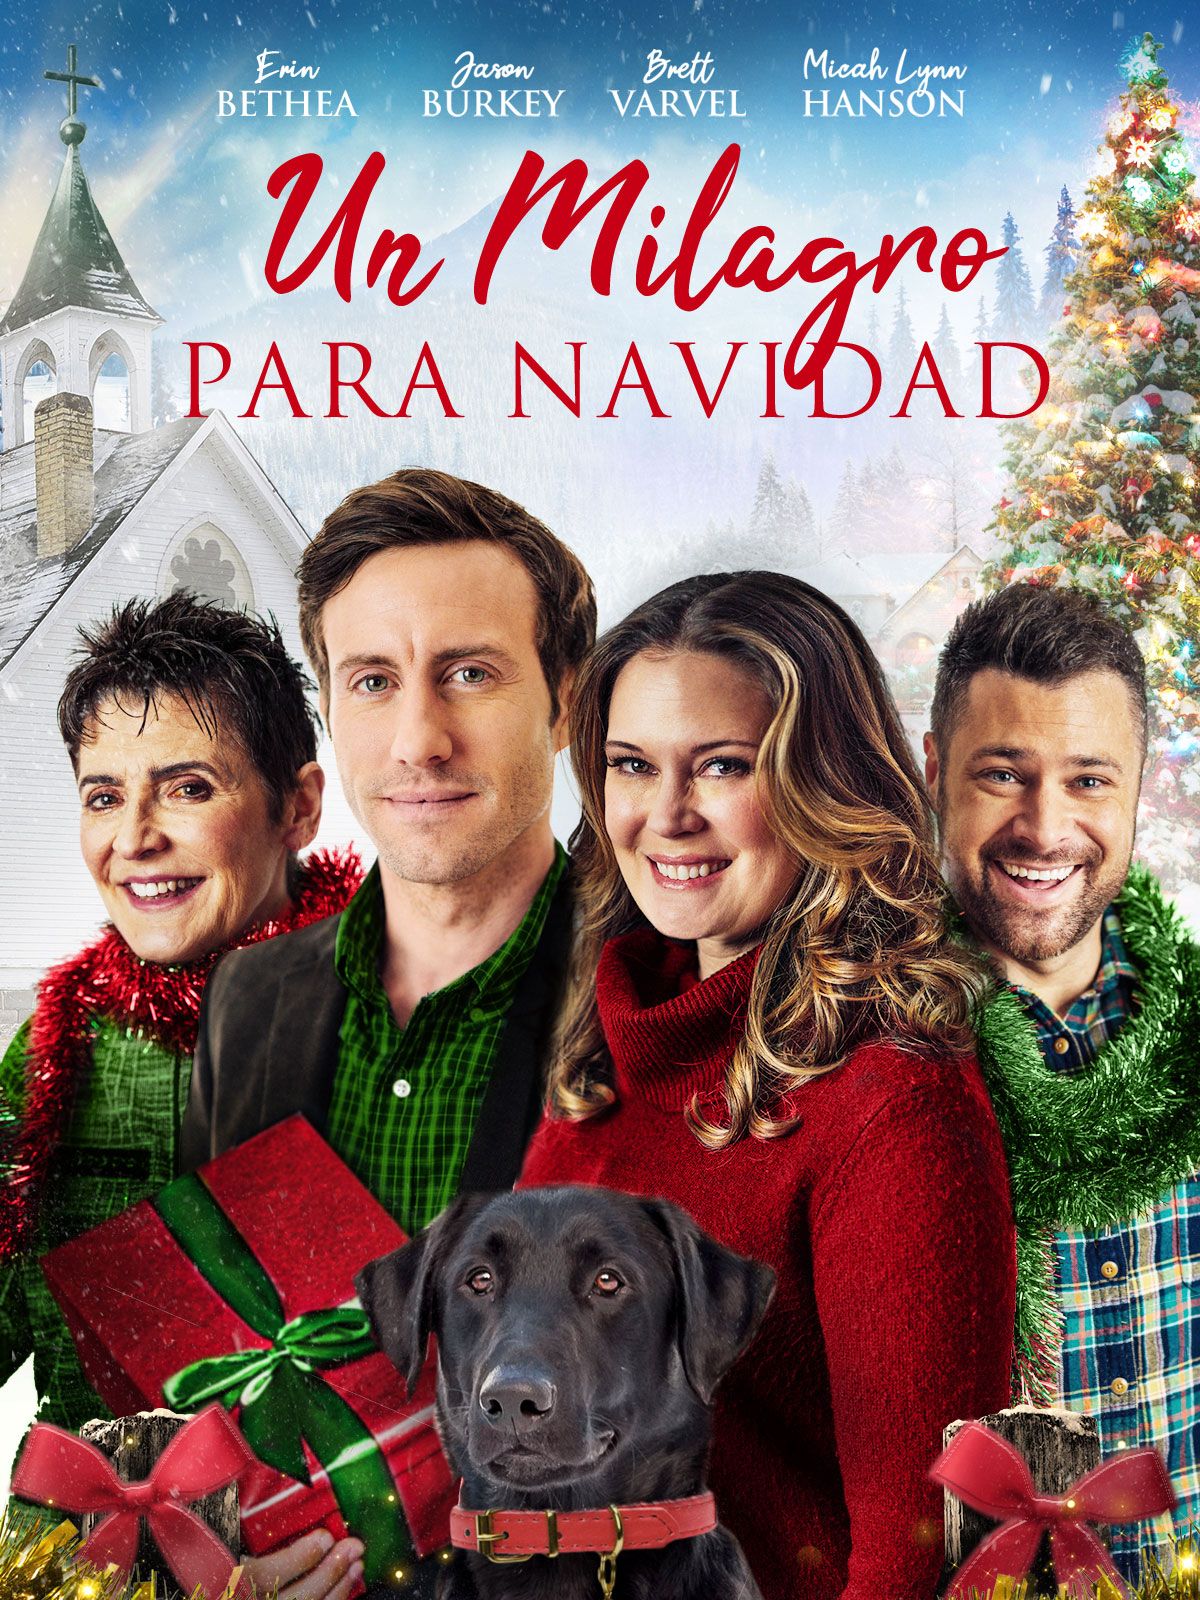 Keyart for the movie Miracle on Christmas (Spanish Title: Un Milagro Para Navidad)